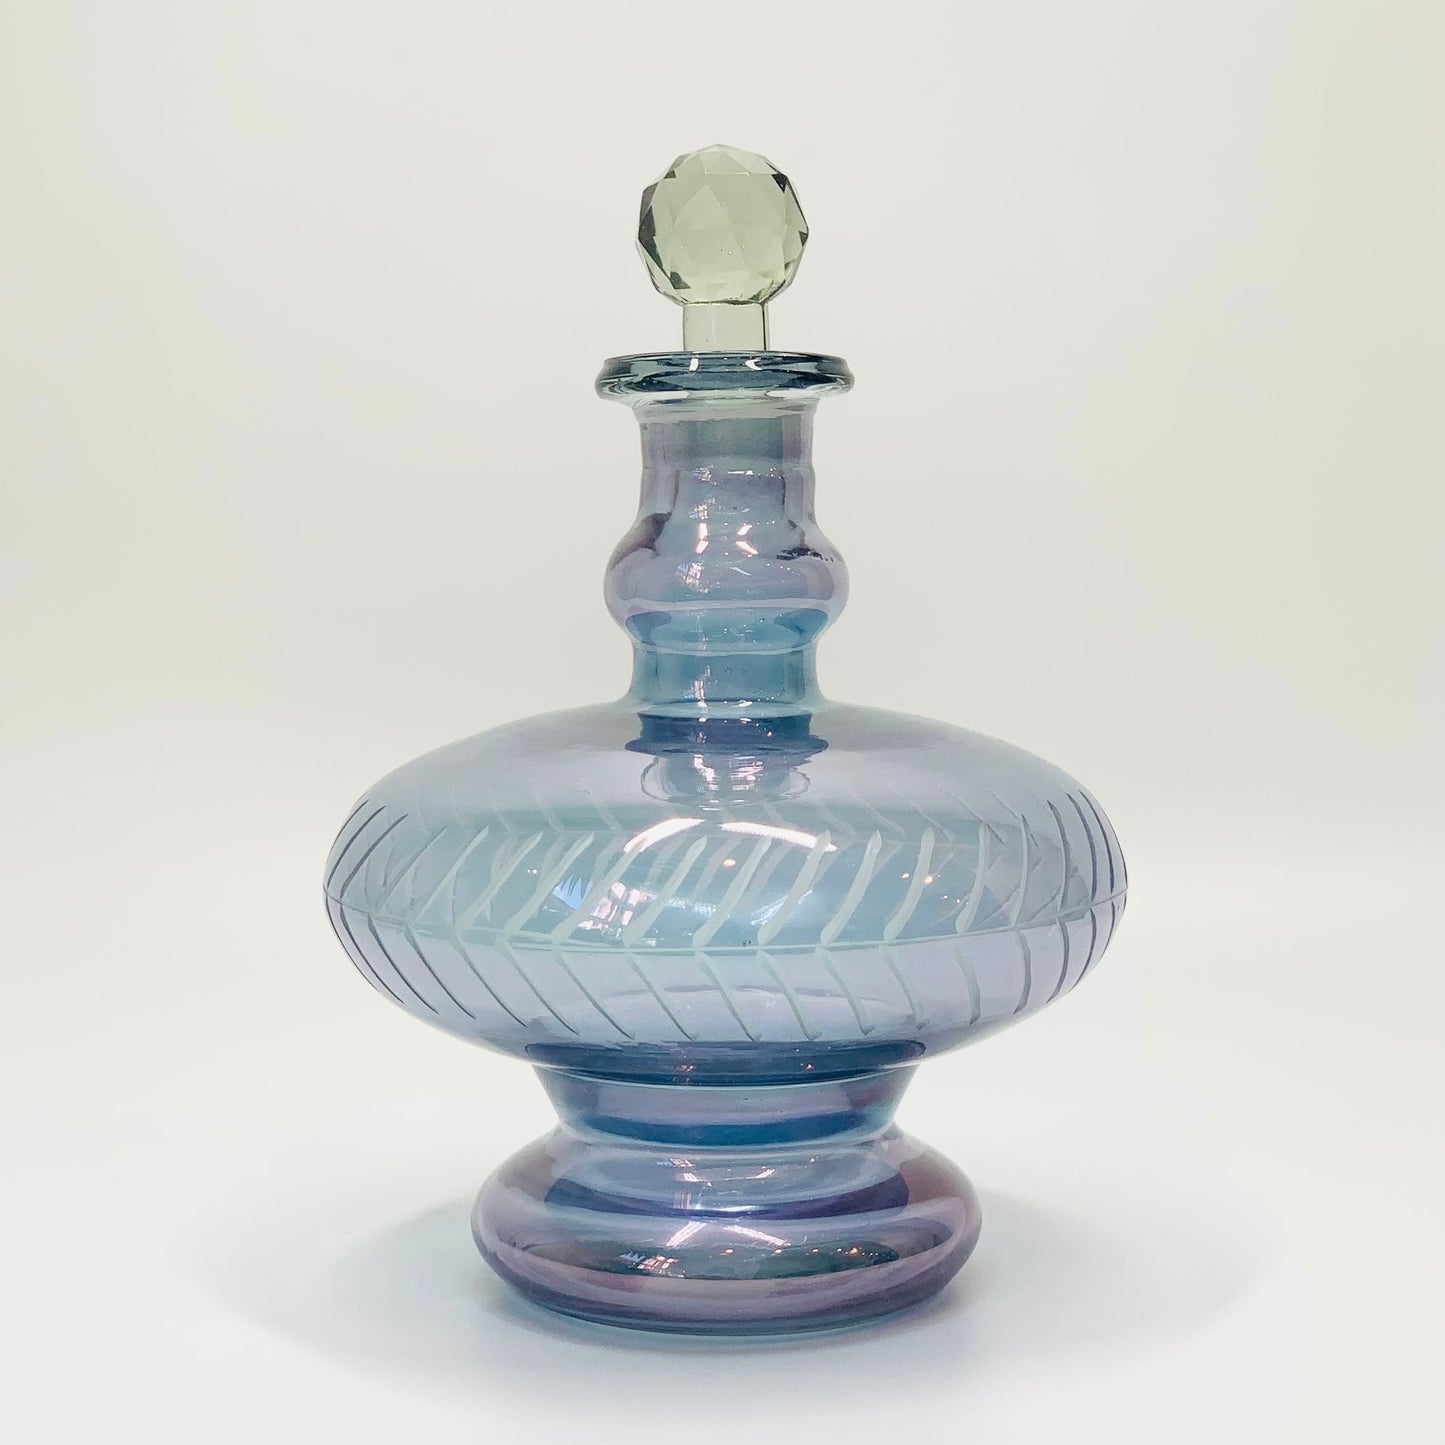 Vintage cut glass iridescent decanter